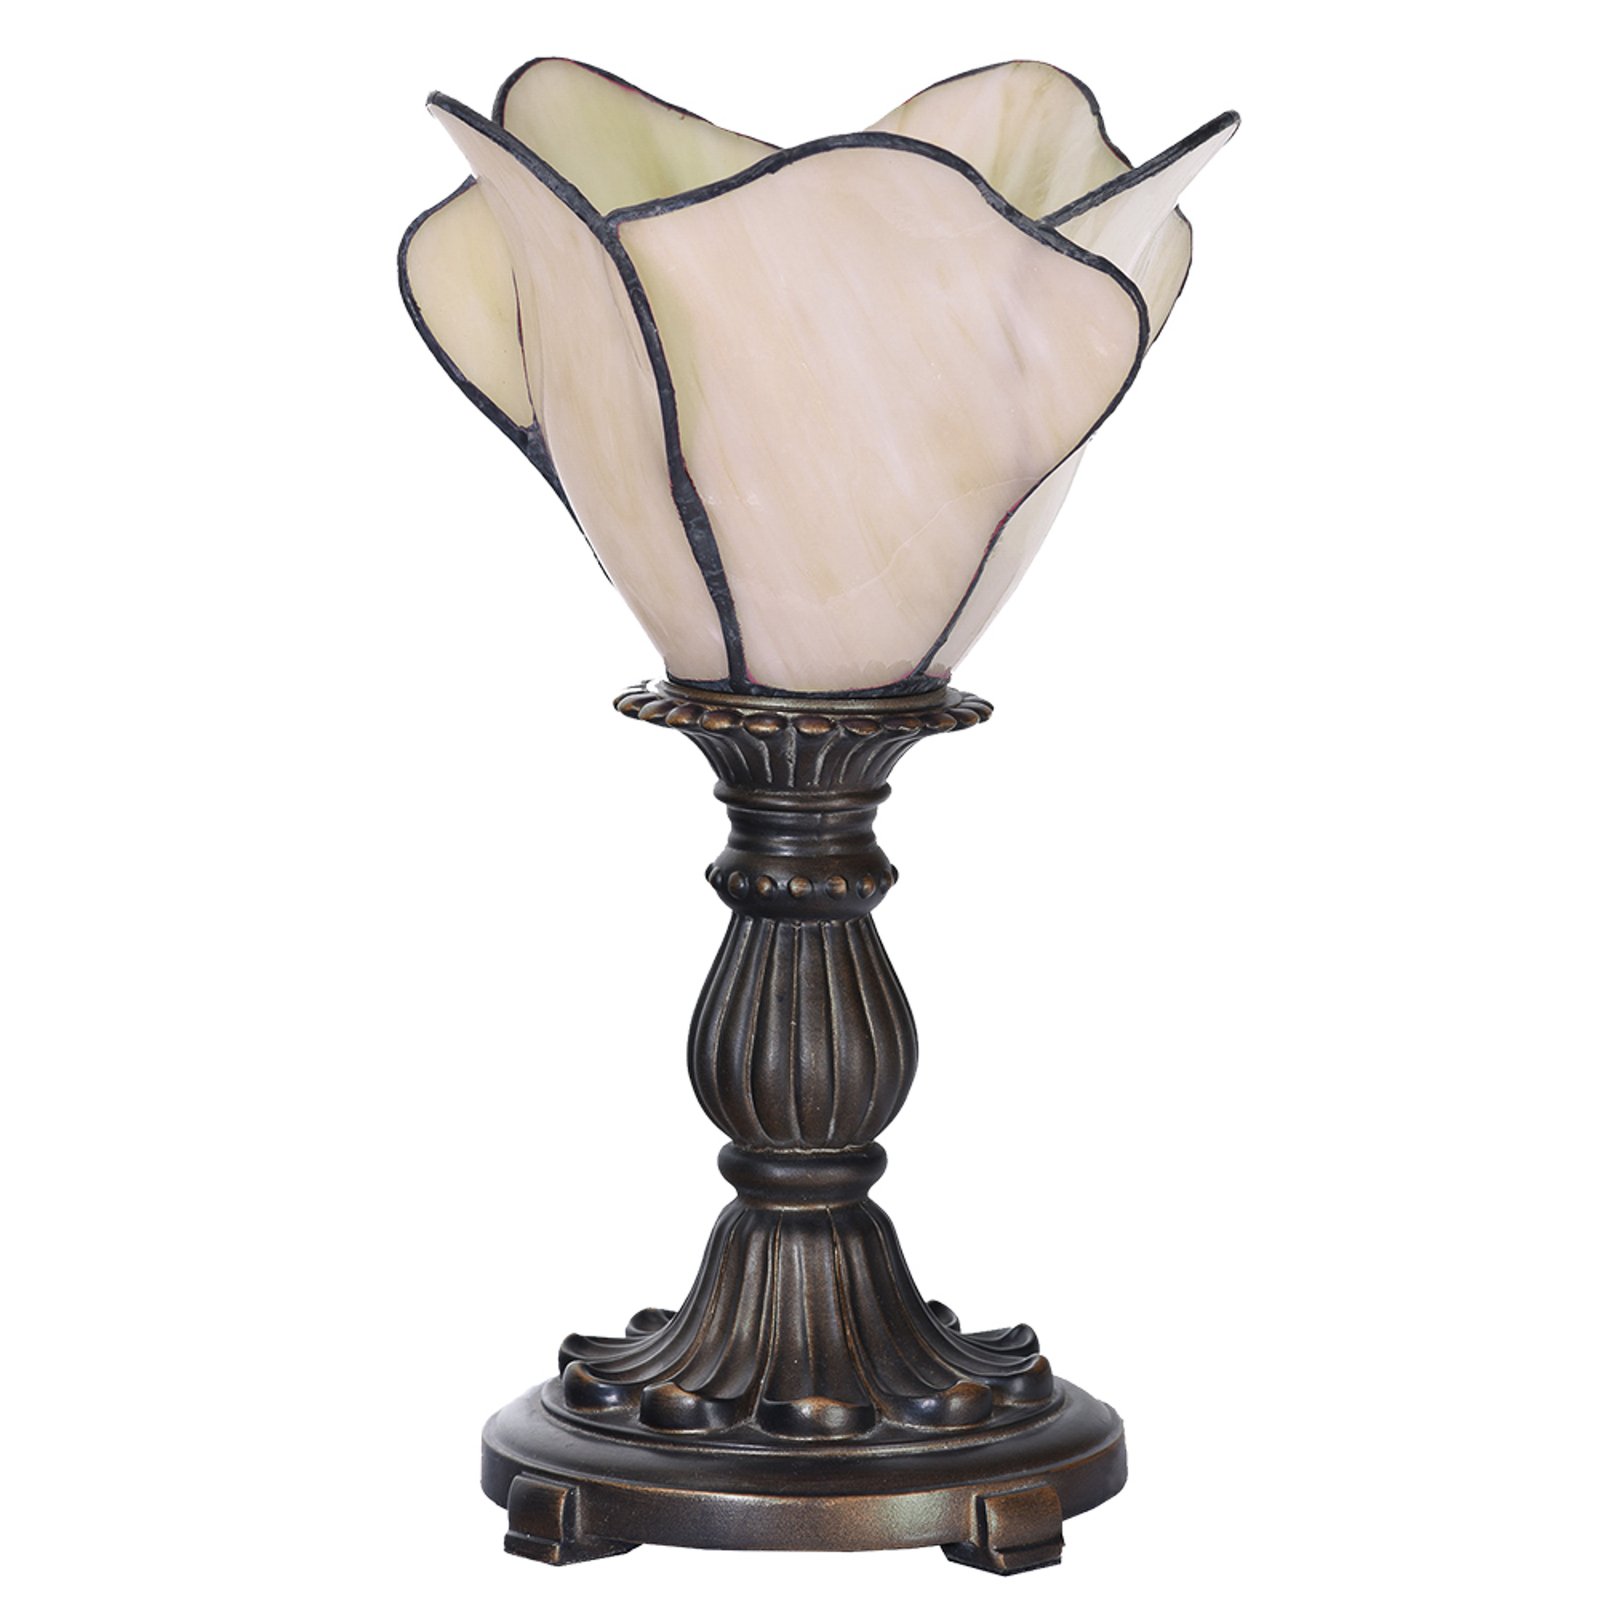 Lampe à poser 5LL-6099N, en crème, style Tiffany